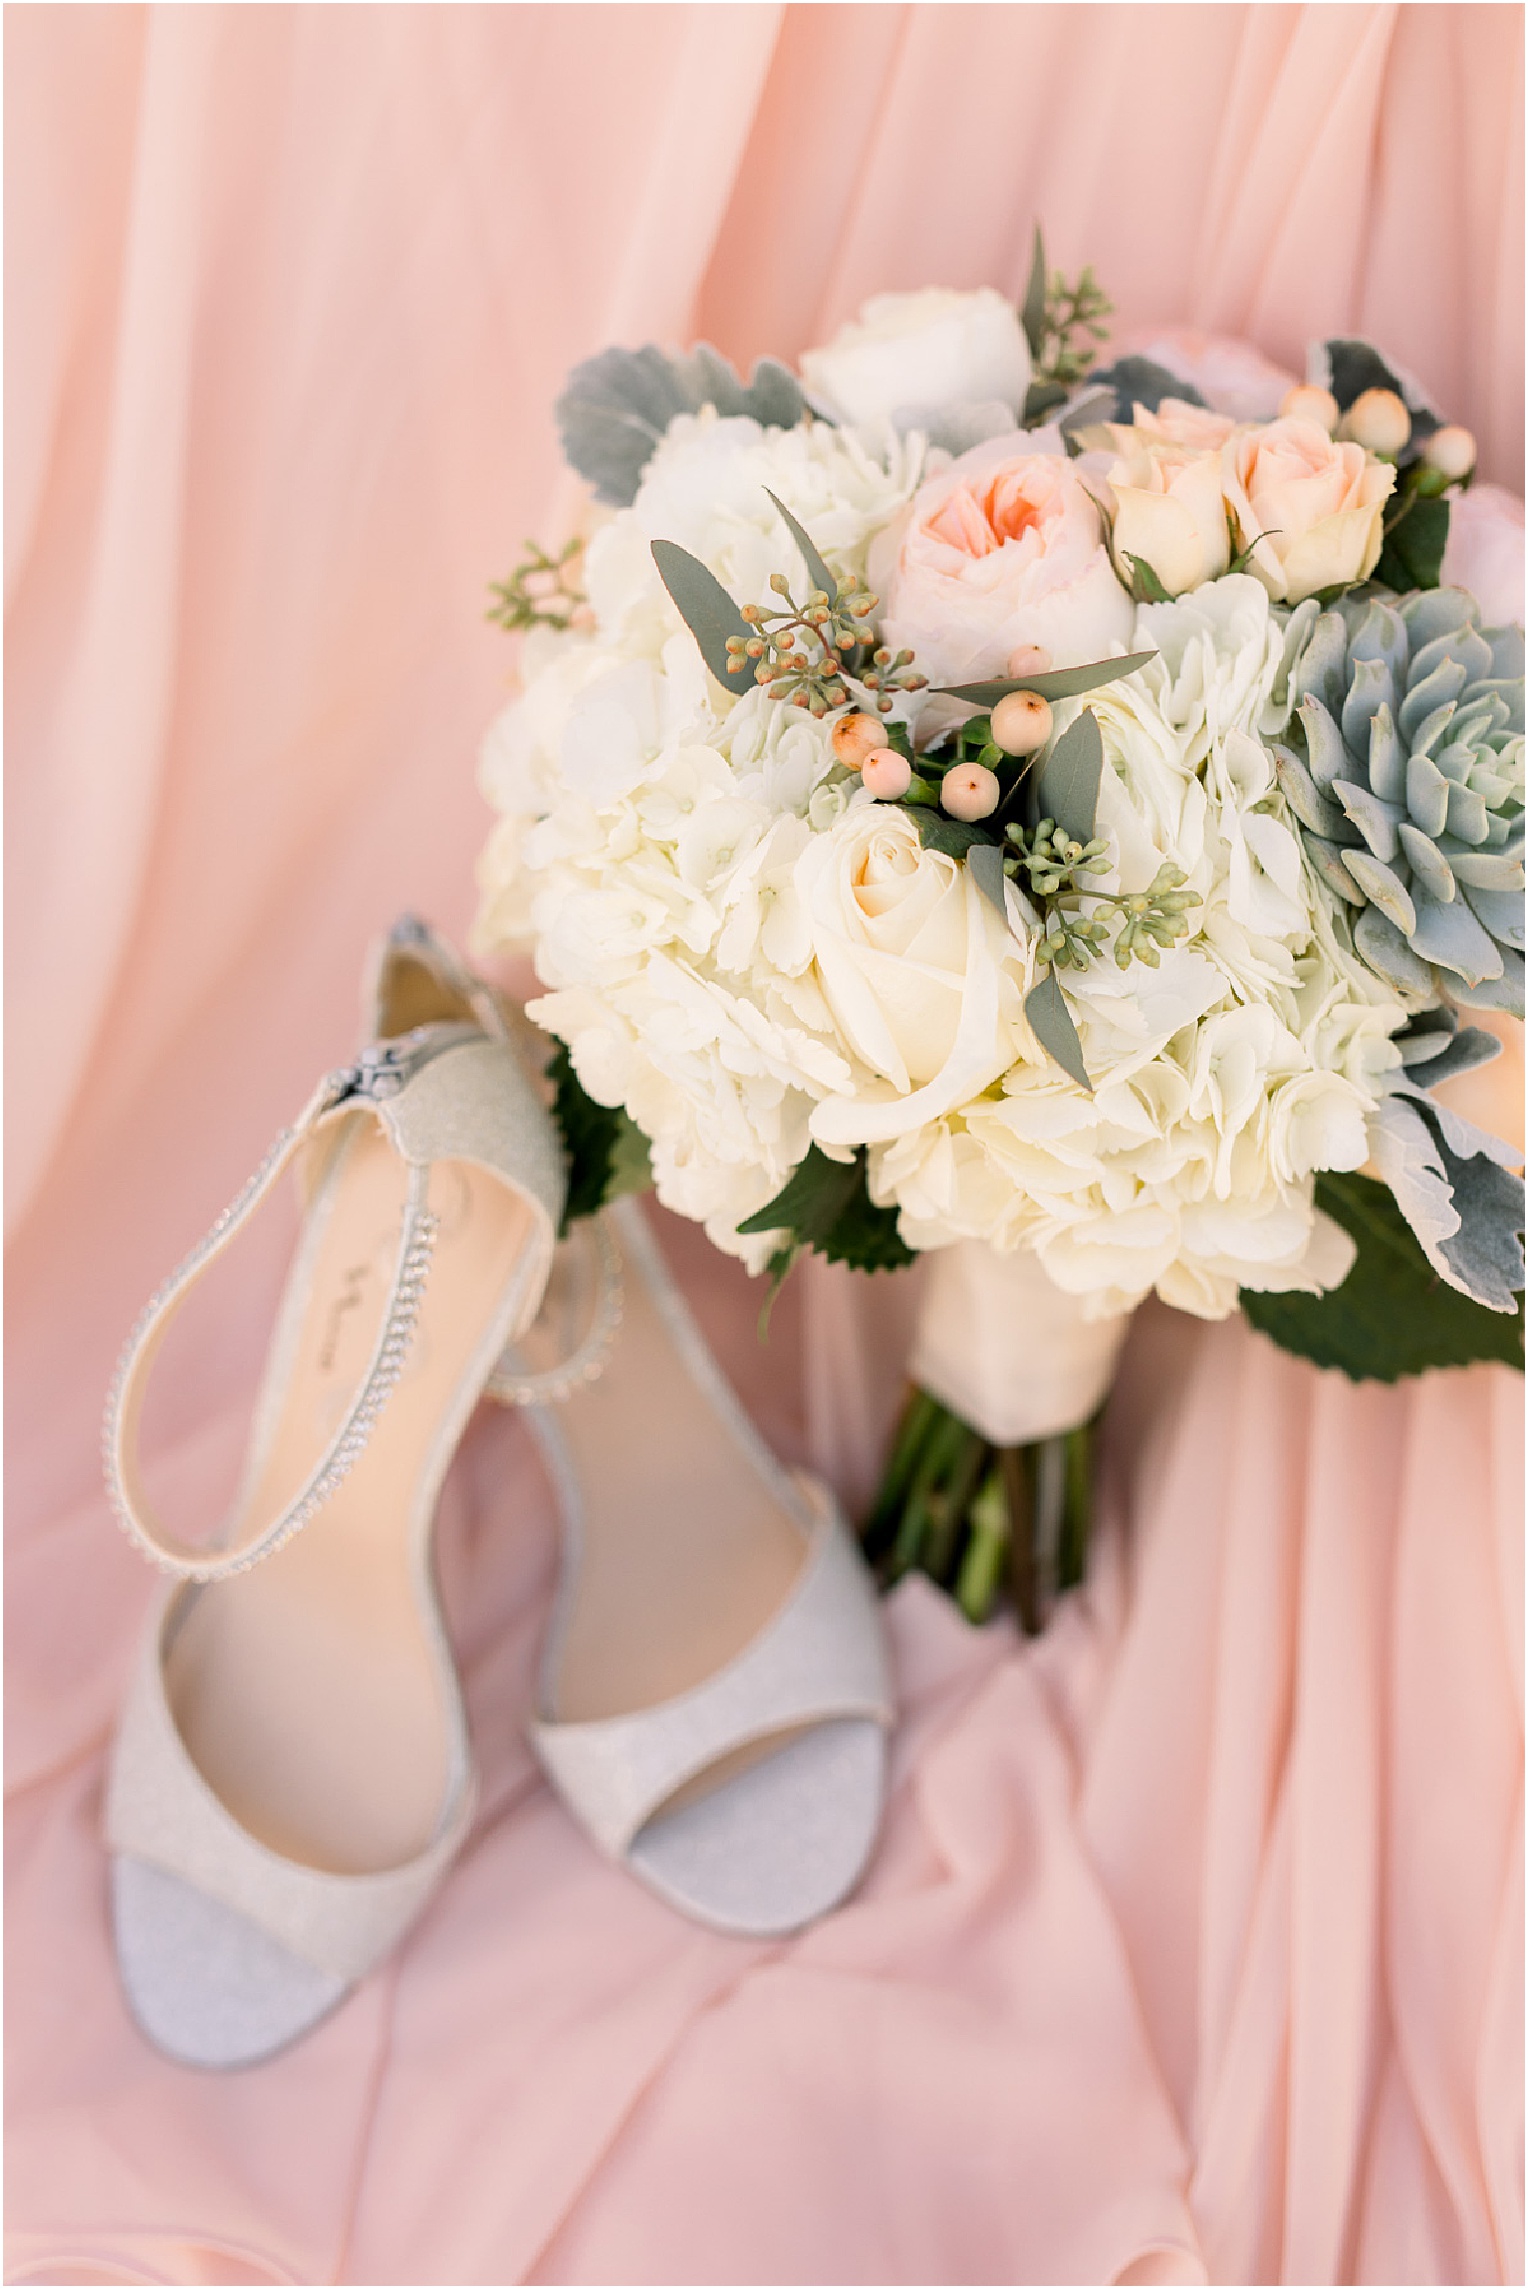 Annabelle + James Hilton El Conquistador Wedding blush wedding details